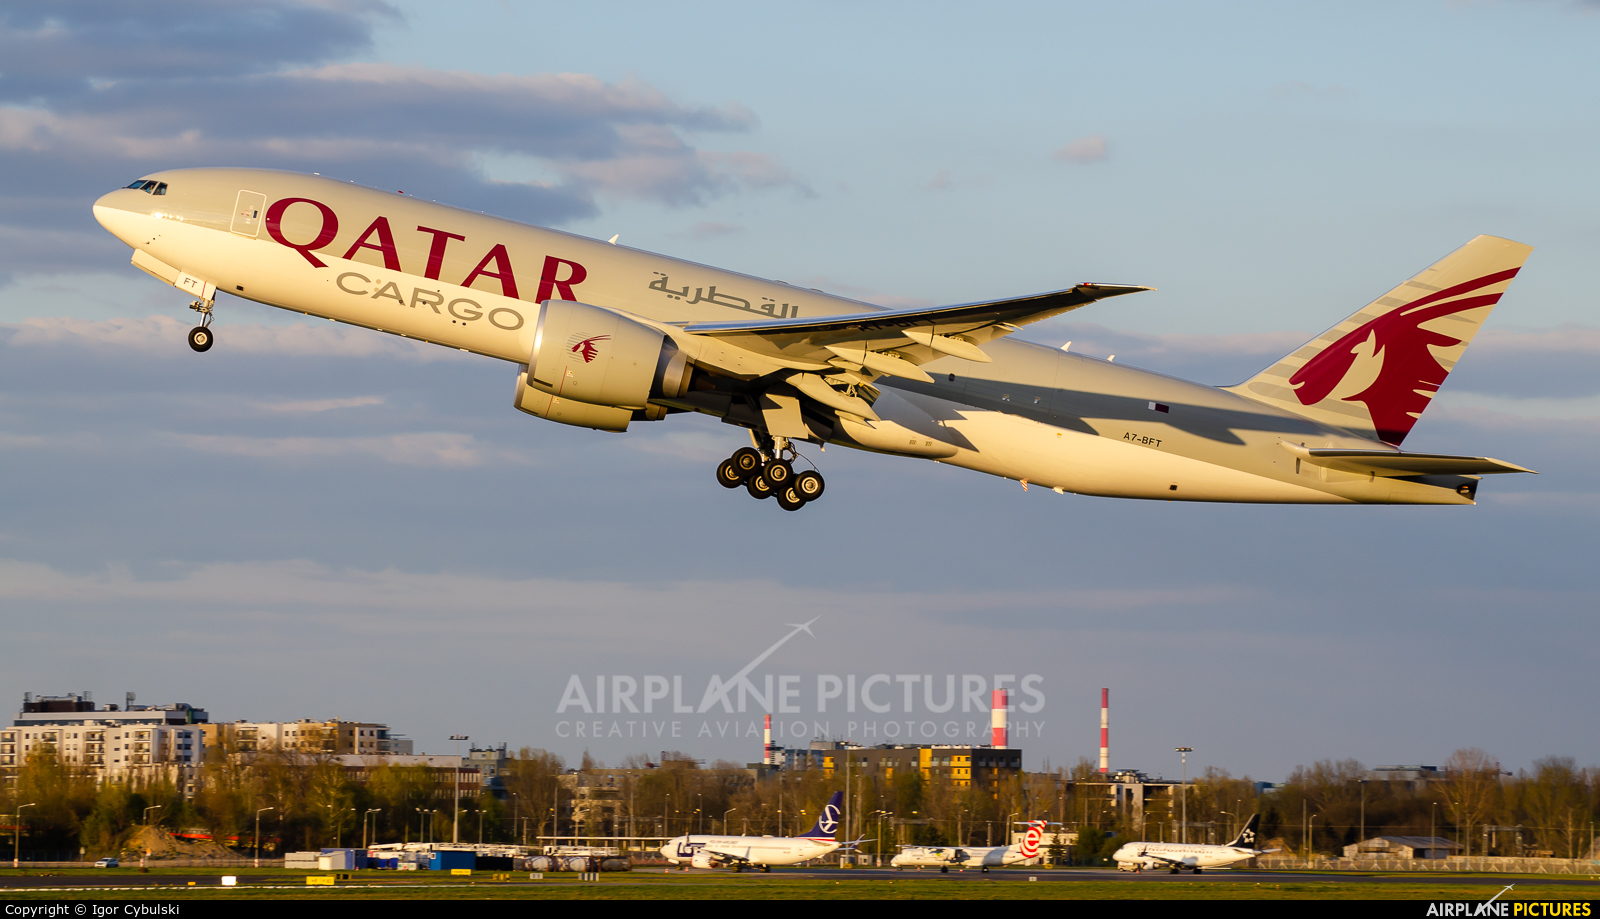 Qatar Airways Cargo A7-BFT aircraft at Warsaw - Frederic Chopin